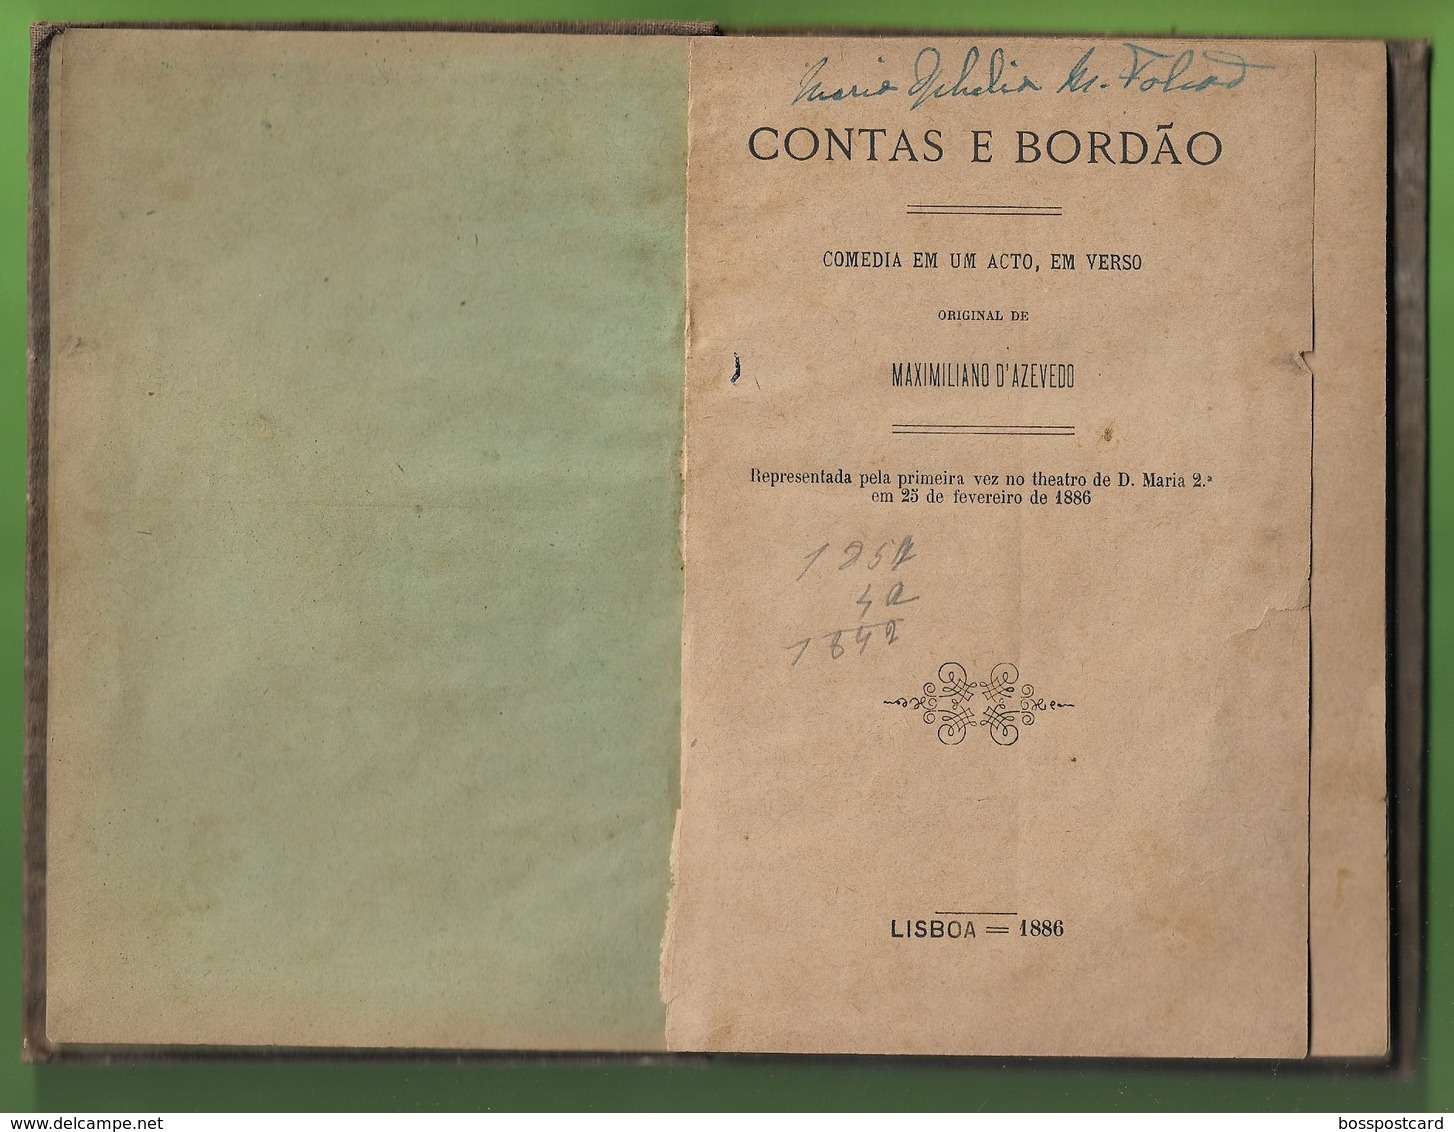 Lisboa - Contas E Bordão - Maximiliano D'Azevedo, 1886 - Teatro - Portugal - Theatre